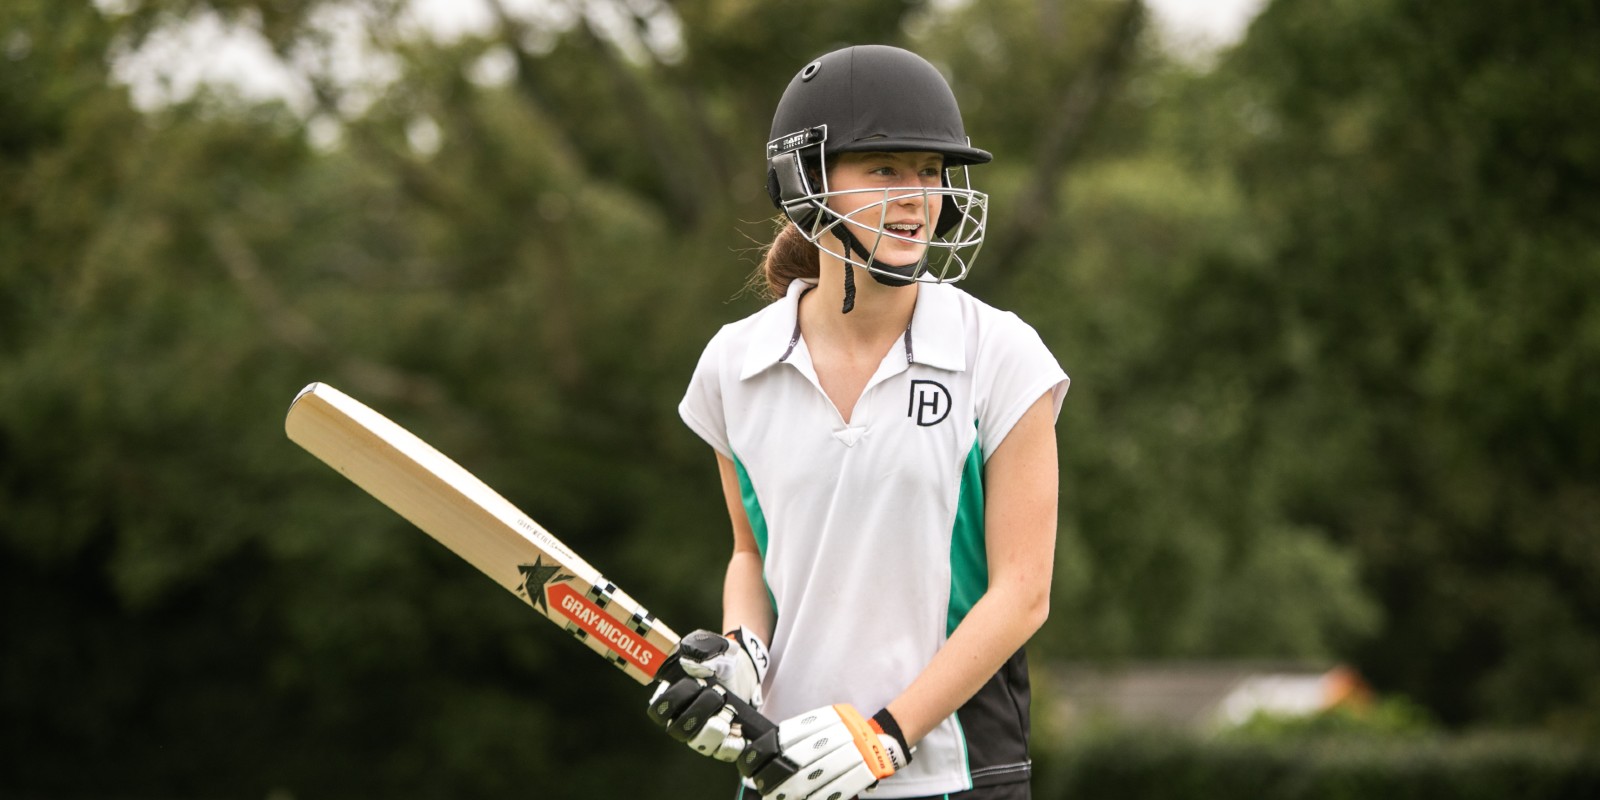 Girl in kit holding cricket bat ready to swing